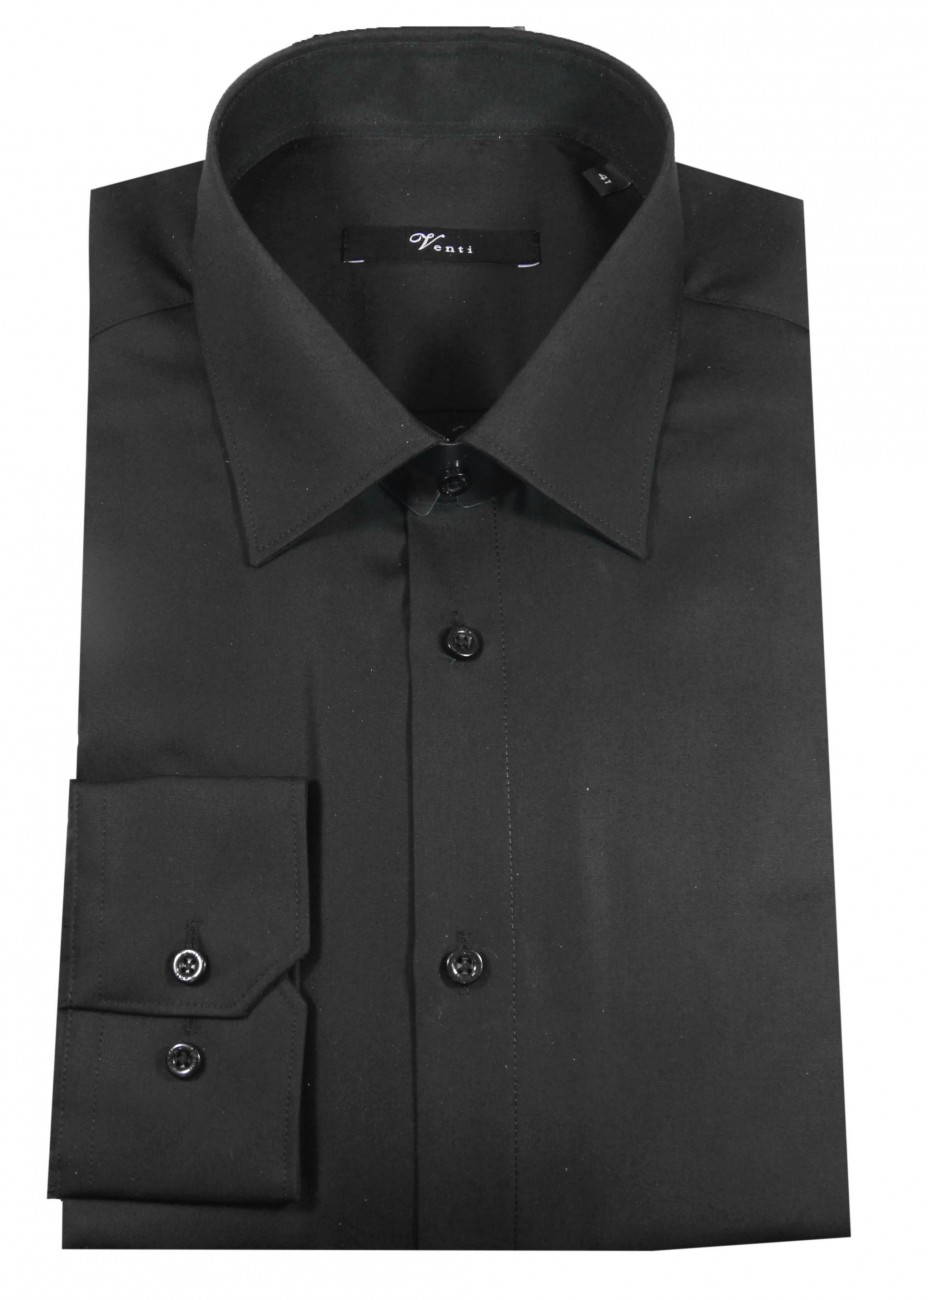 Herrenhemd schwarz Modern fit  | extra langer arm 72cm